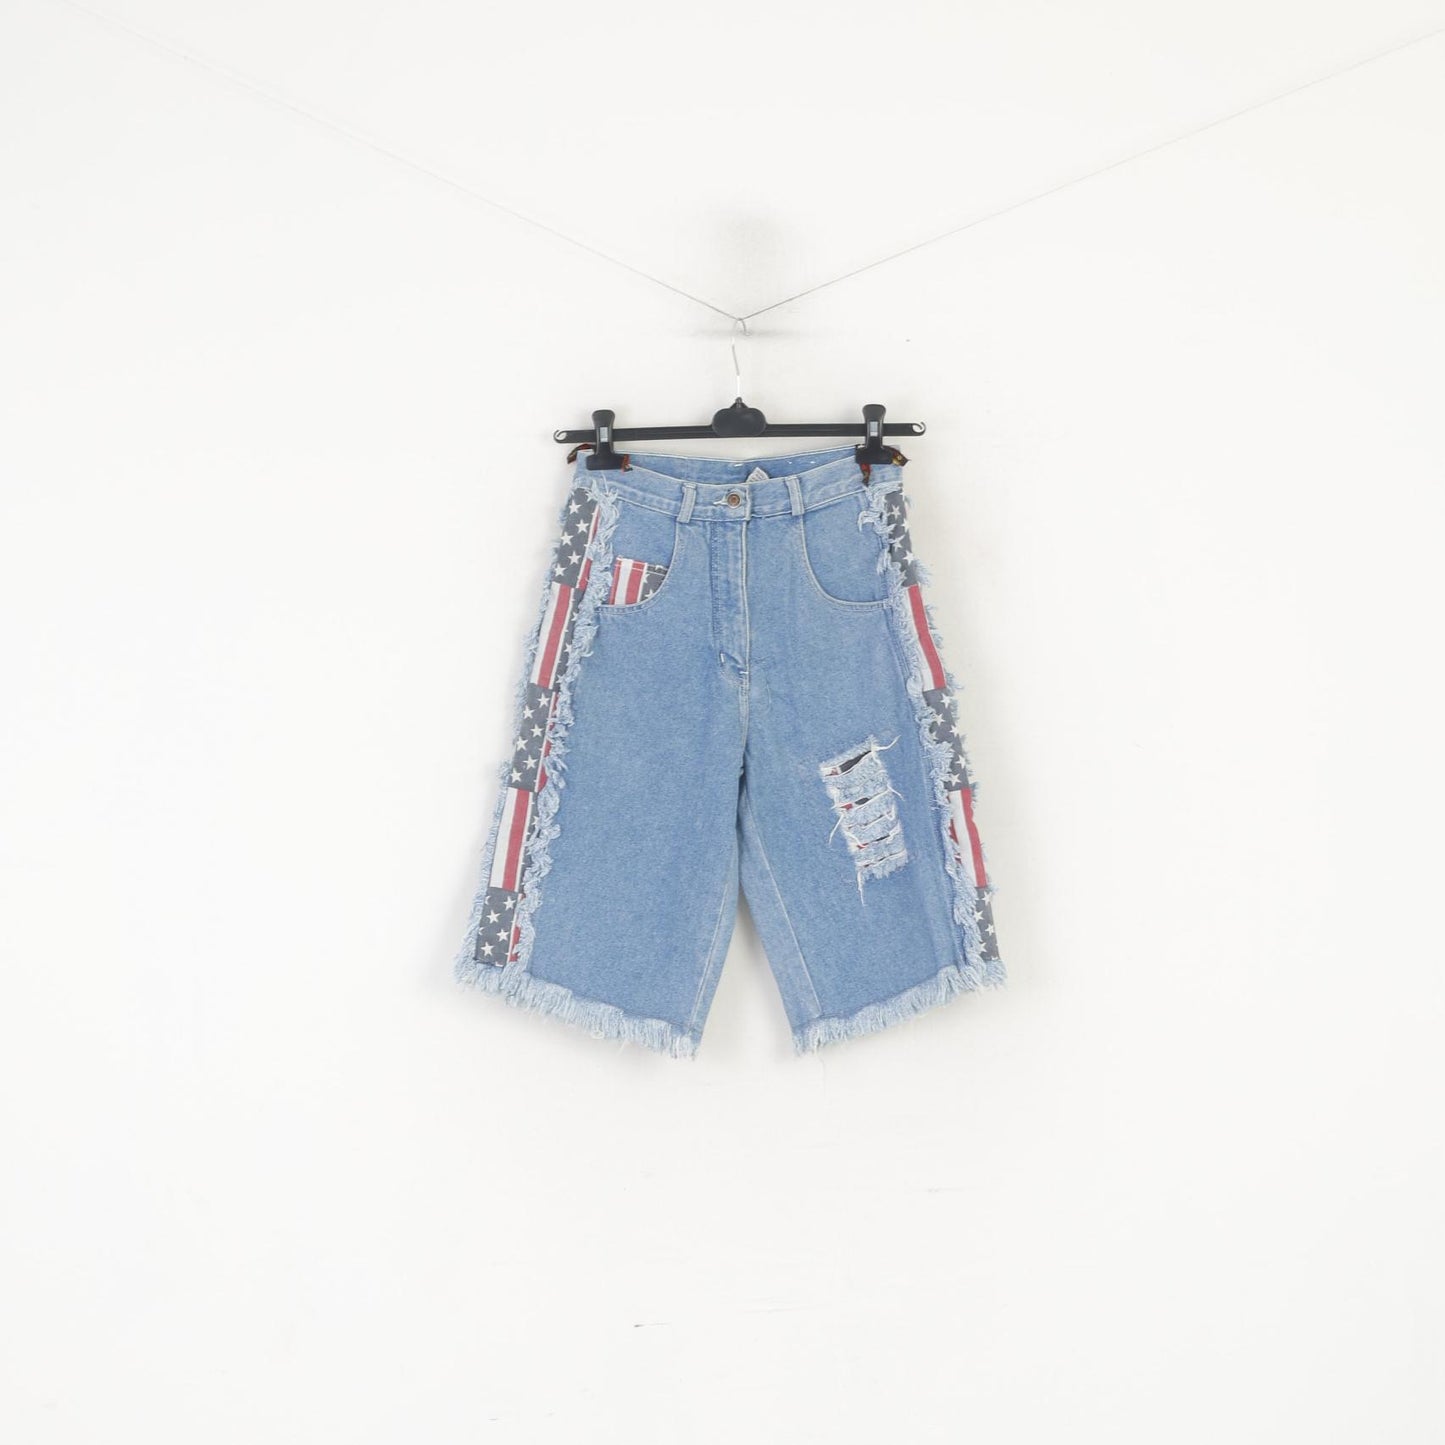 C&A Jinglers Women 27 36 S Shorts Blue Cotton Capri Denim Vintage Pants